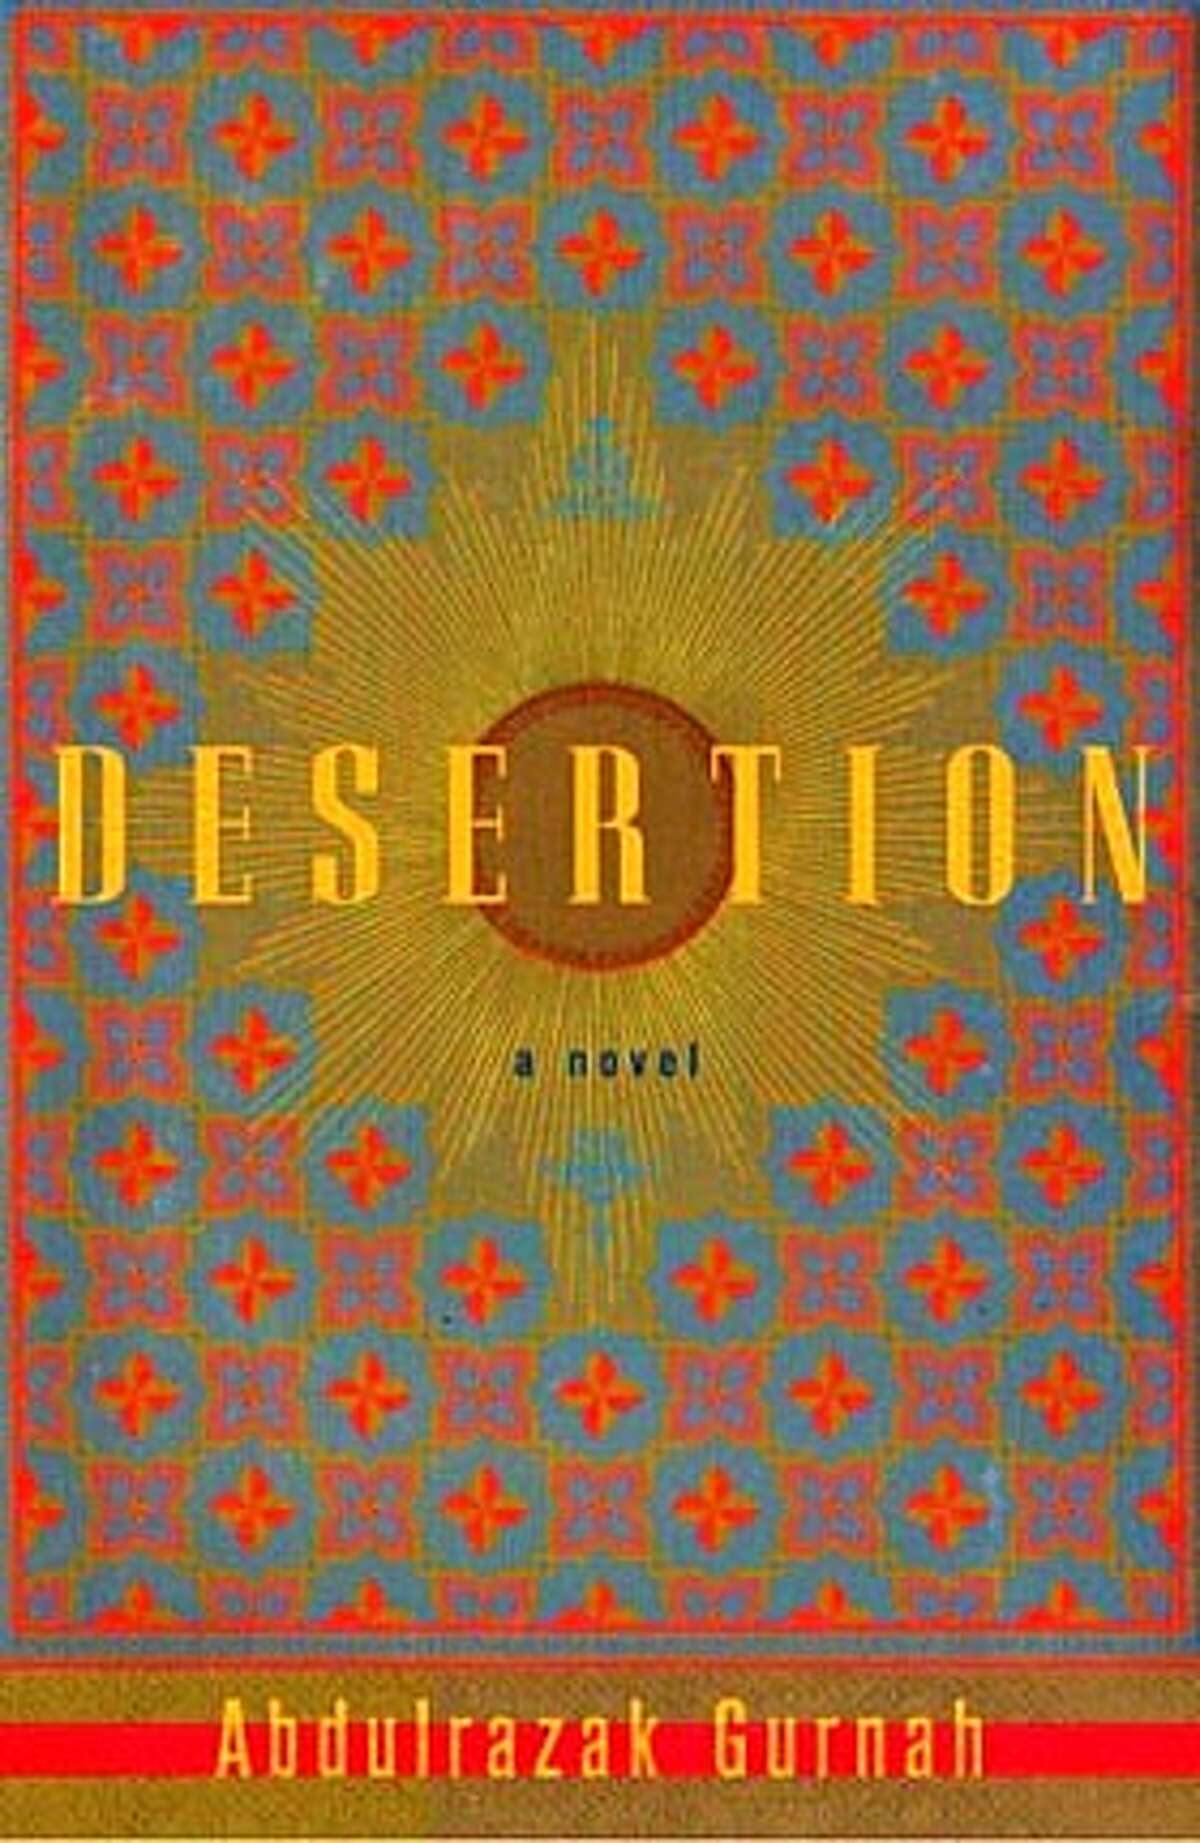 Book cover art for, "Desertion": A novel by Abdulrazak Gurnah. BookReview#BookReview#Chronicle#07-24-2005#ALL#2star#e6#0423099905